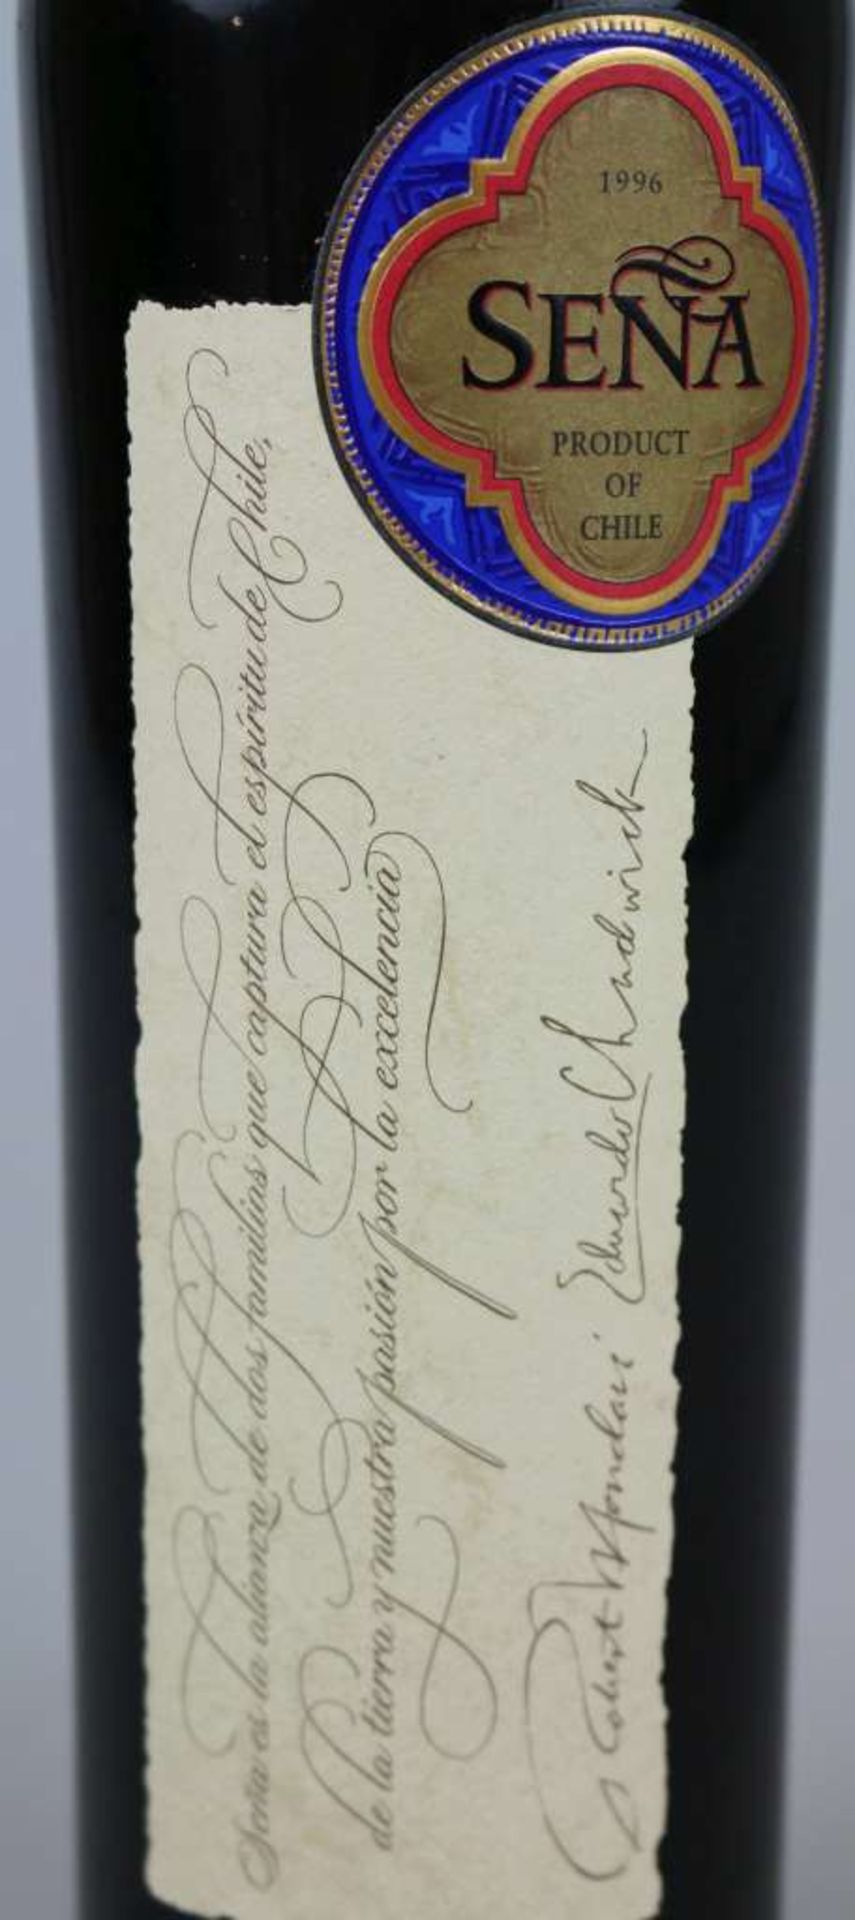 Rotwein, 6 Flaschen Sena, Vina Errazuriz/ Mondavi, Aconcagua Valley Chile, 1996, 0,75 L. In - Bild 4 aus 6